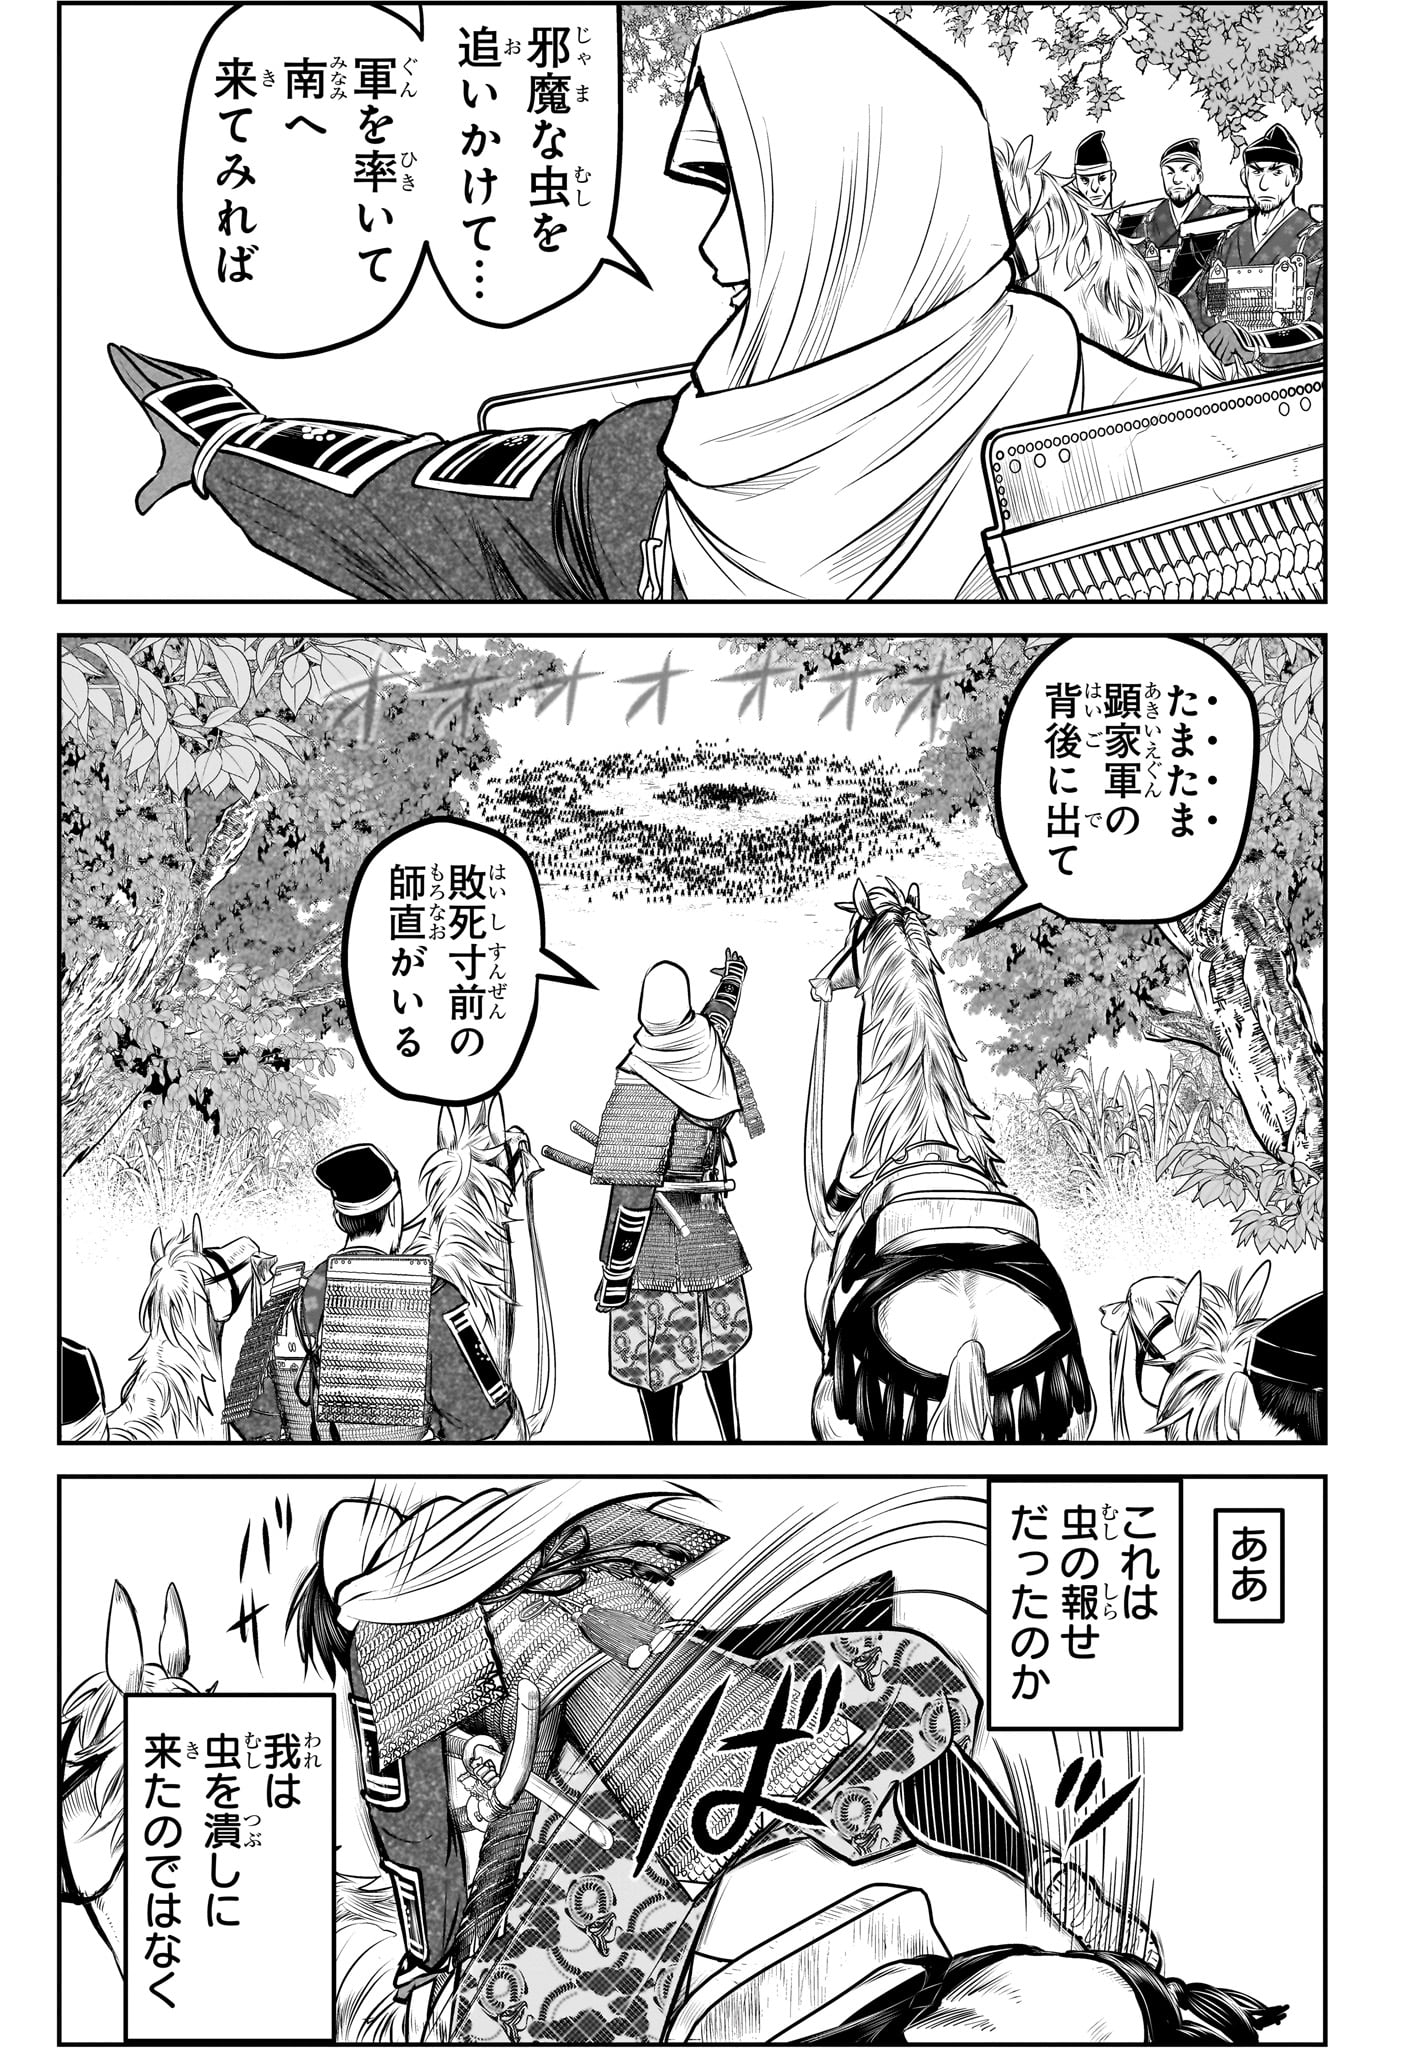 Nige Jouzu no Wakagimi - Chapter 165 - Page 9